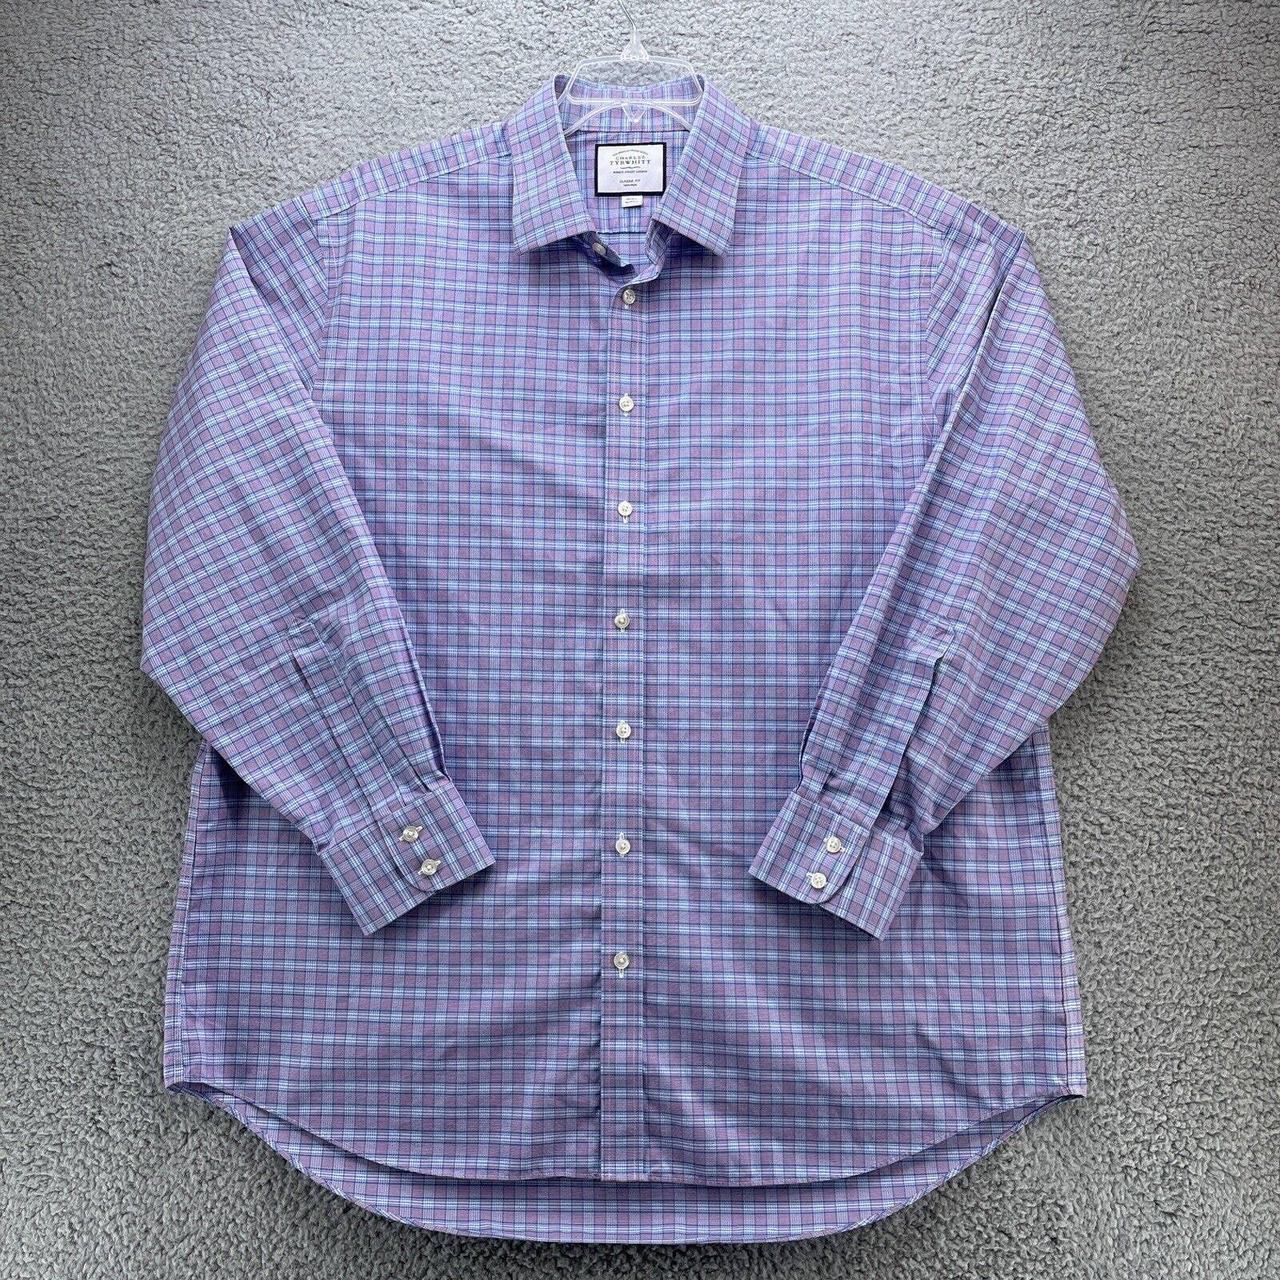 Charles Tyrwhitt Men's Purple Shirt